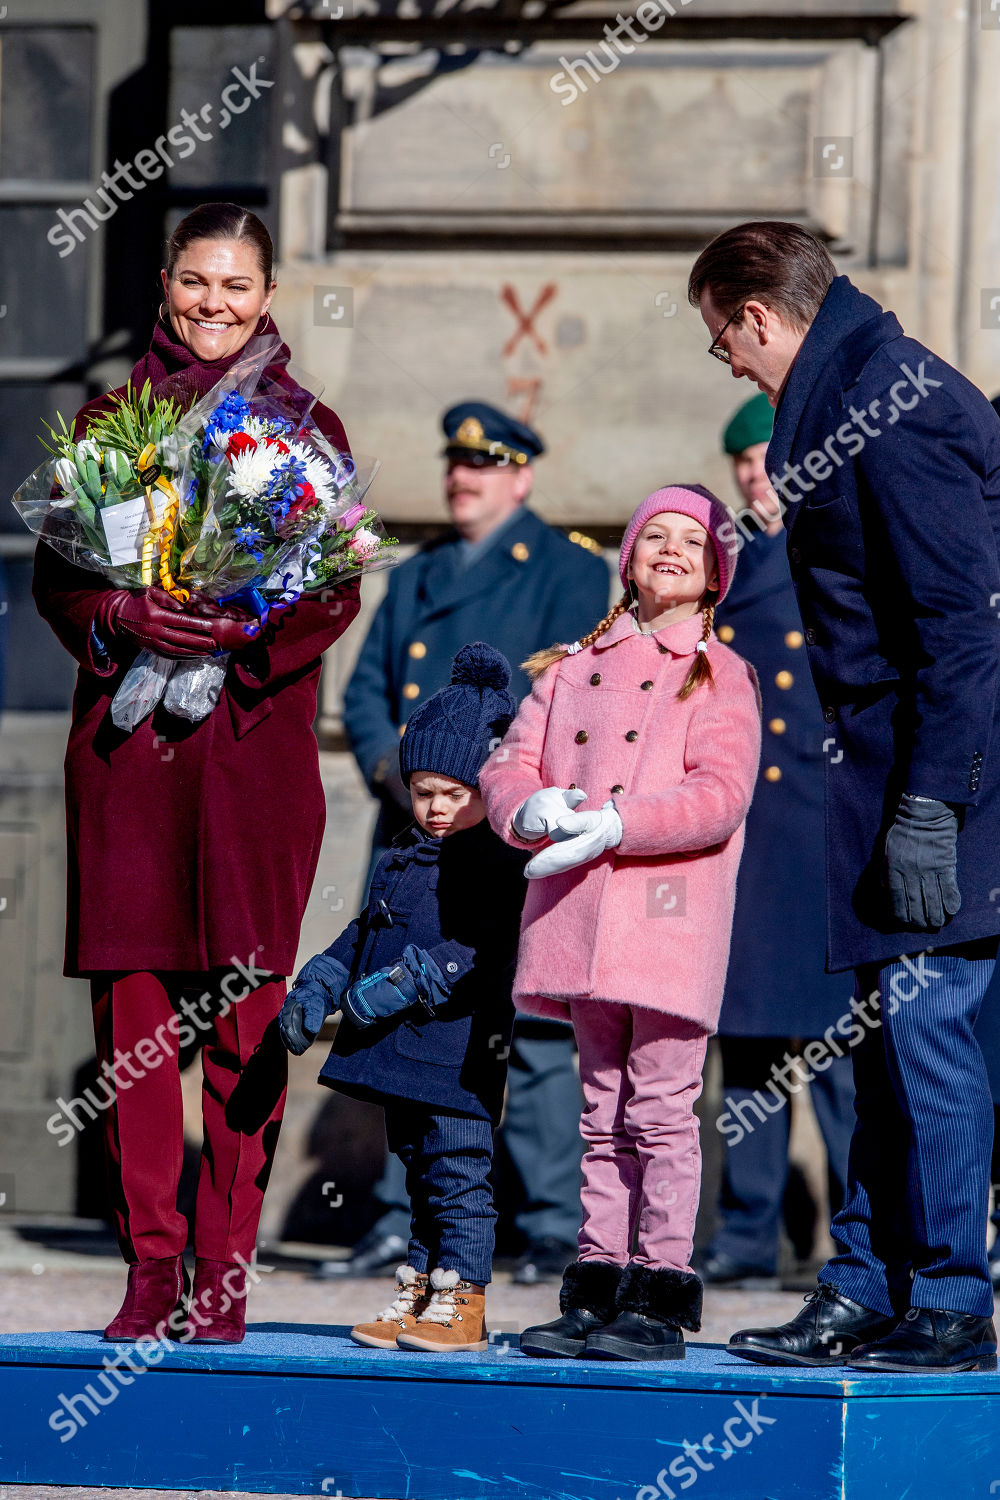 crown-princess-victoria-name-day-celebrations-stockholm-sweden-shutterstock-editorial-10151872i.jpg